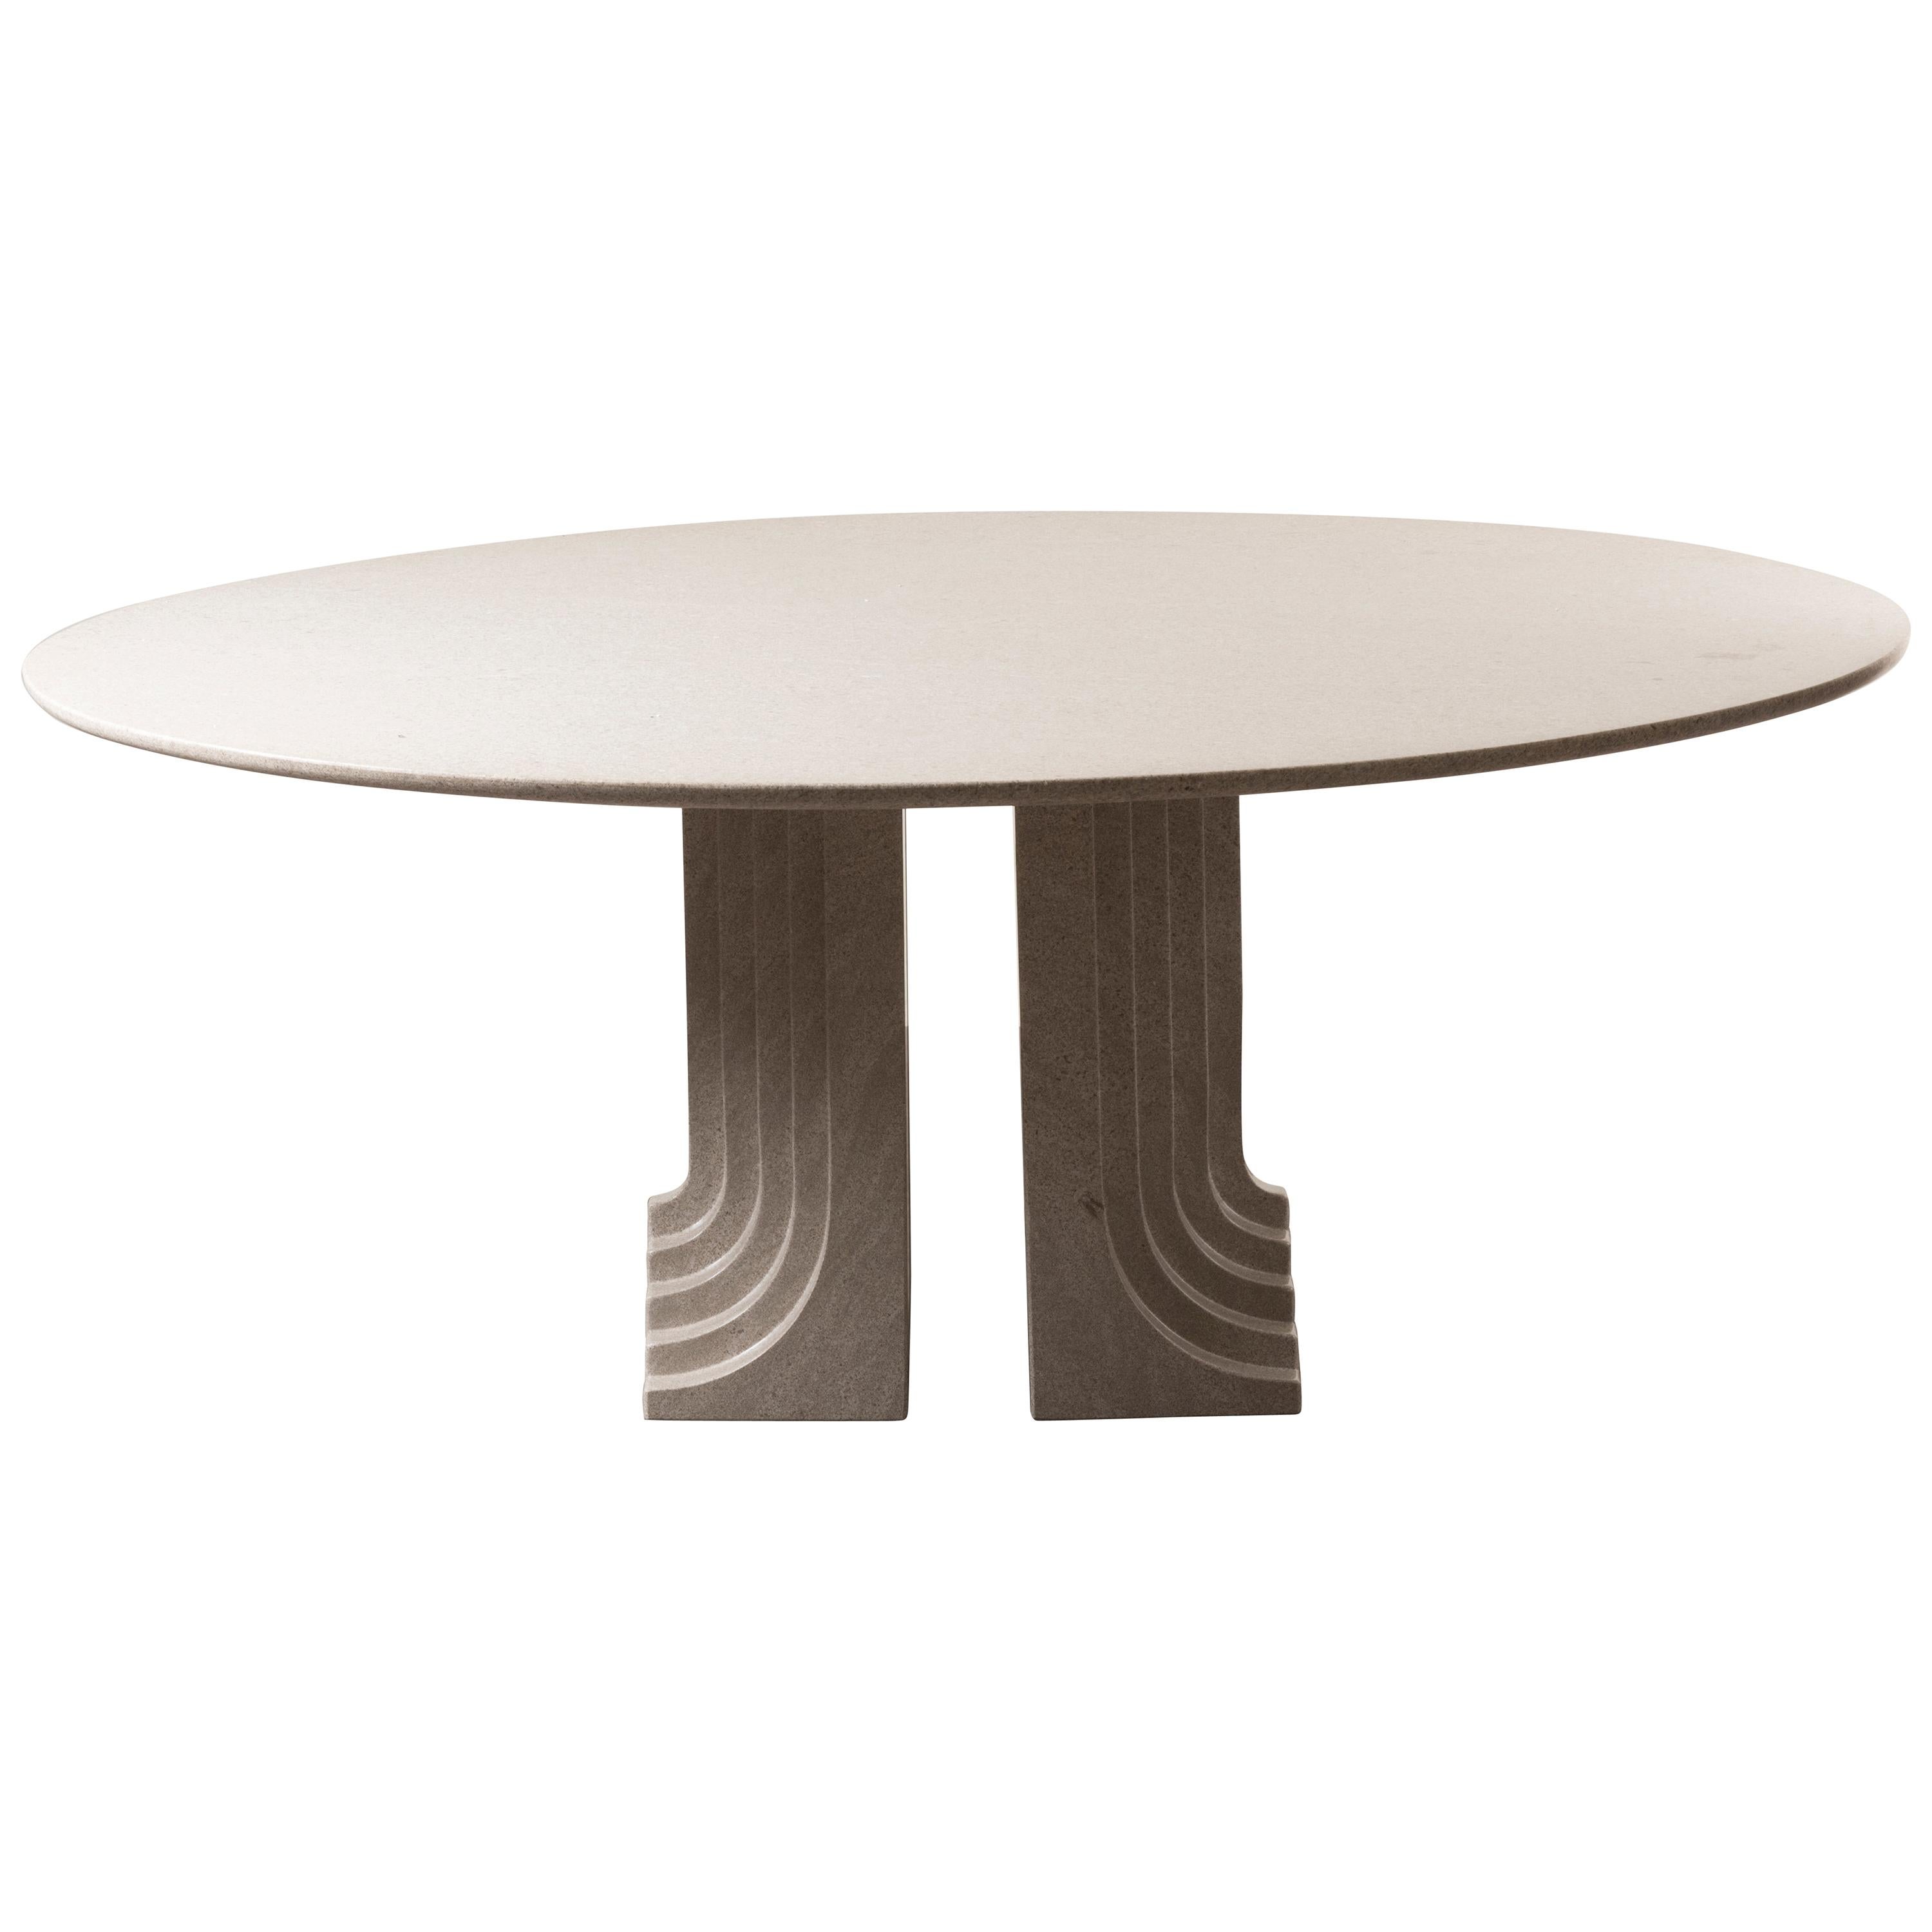 Dining Table Mod, 'Samo' by Carlo Scarpa Dining Table Mod, 'Samo' by Carlo Scar